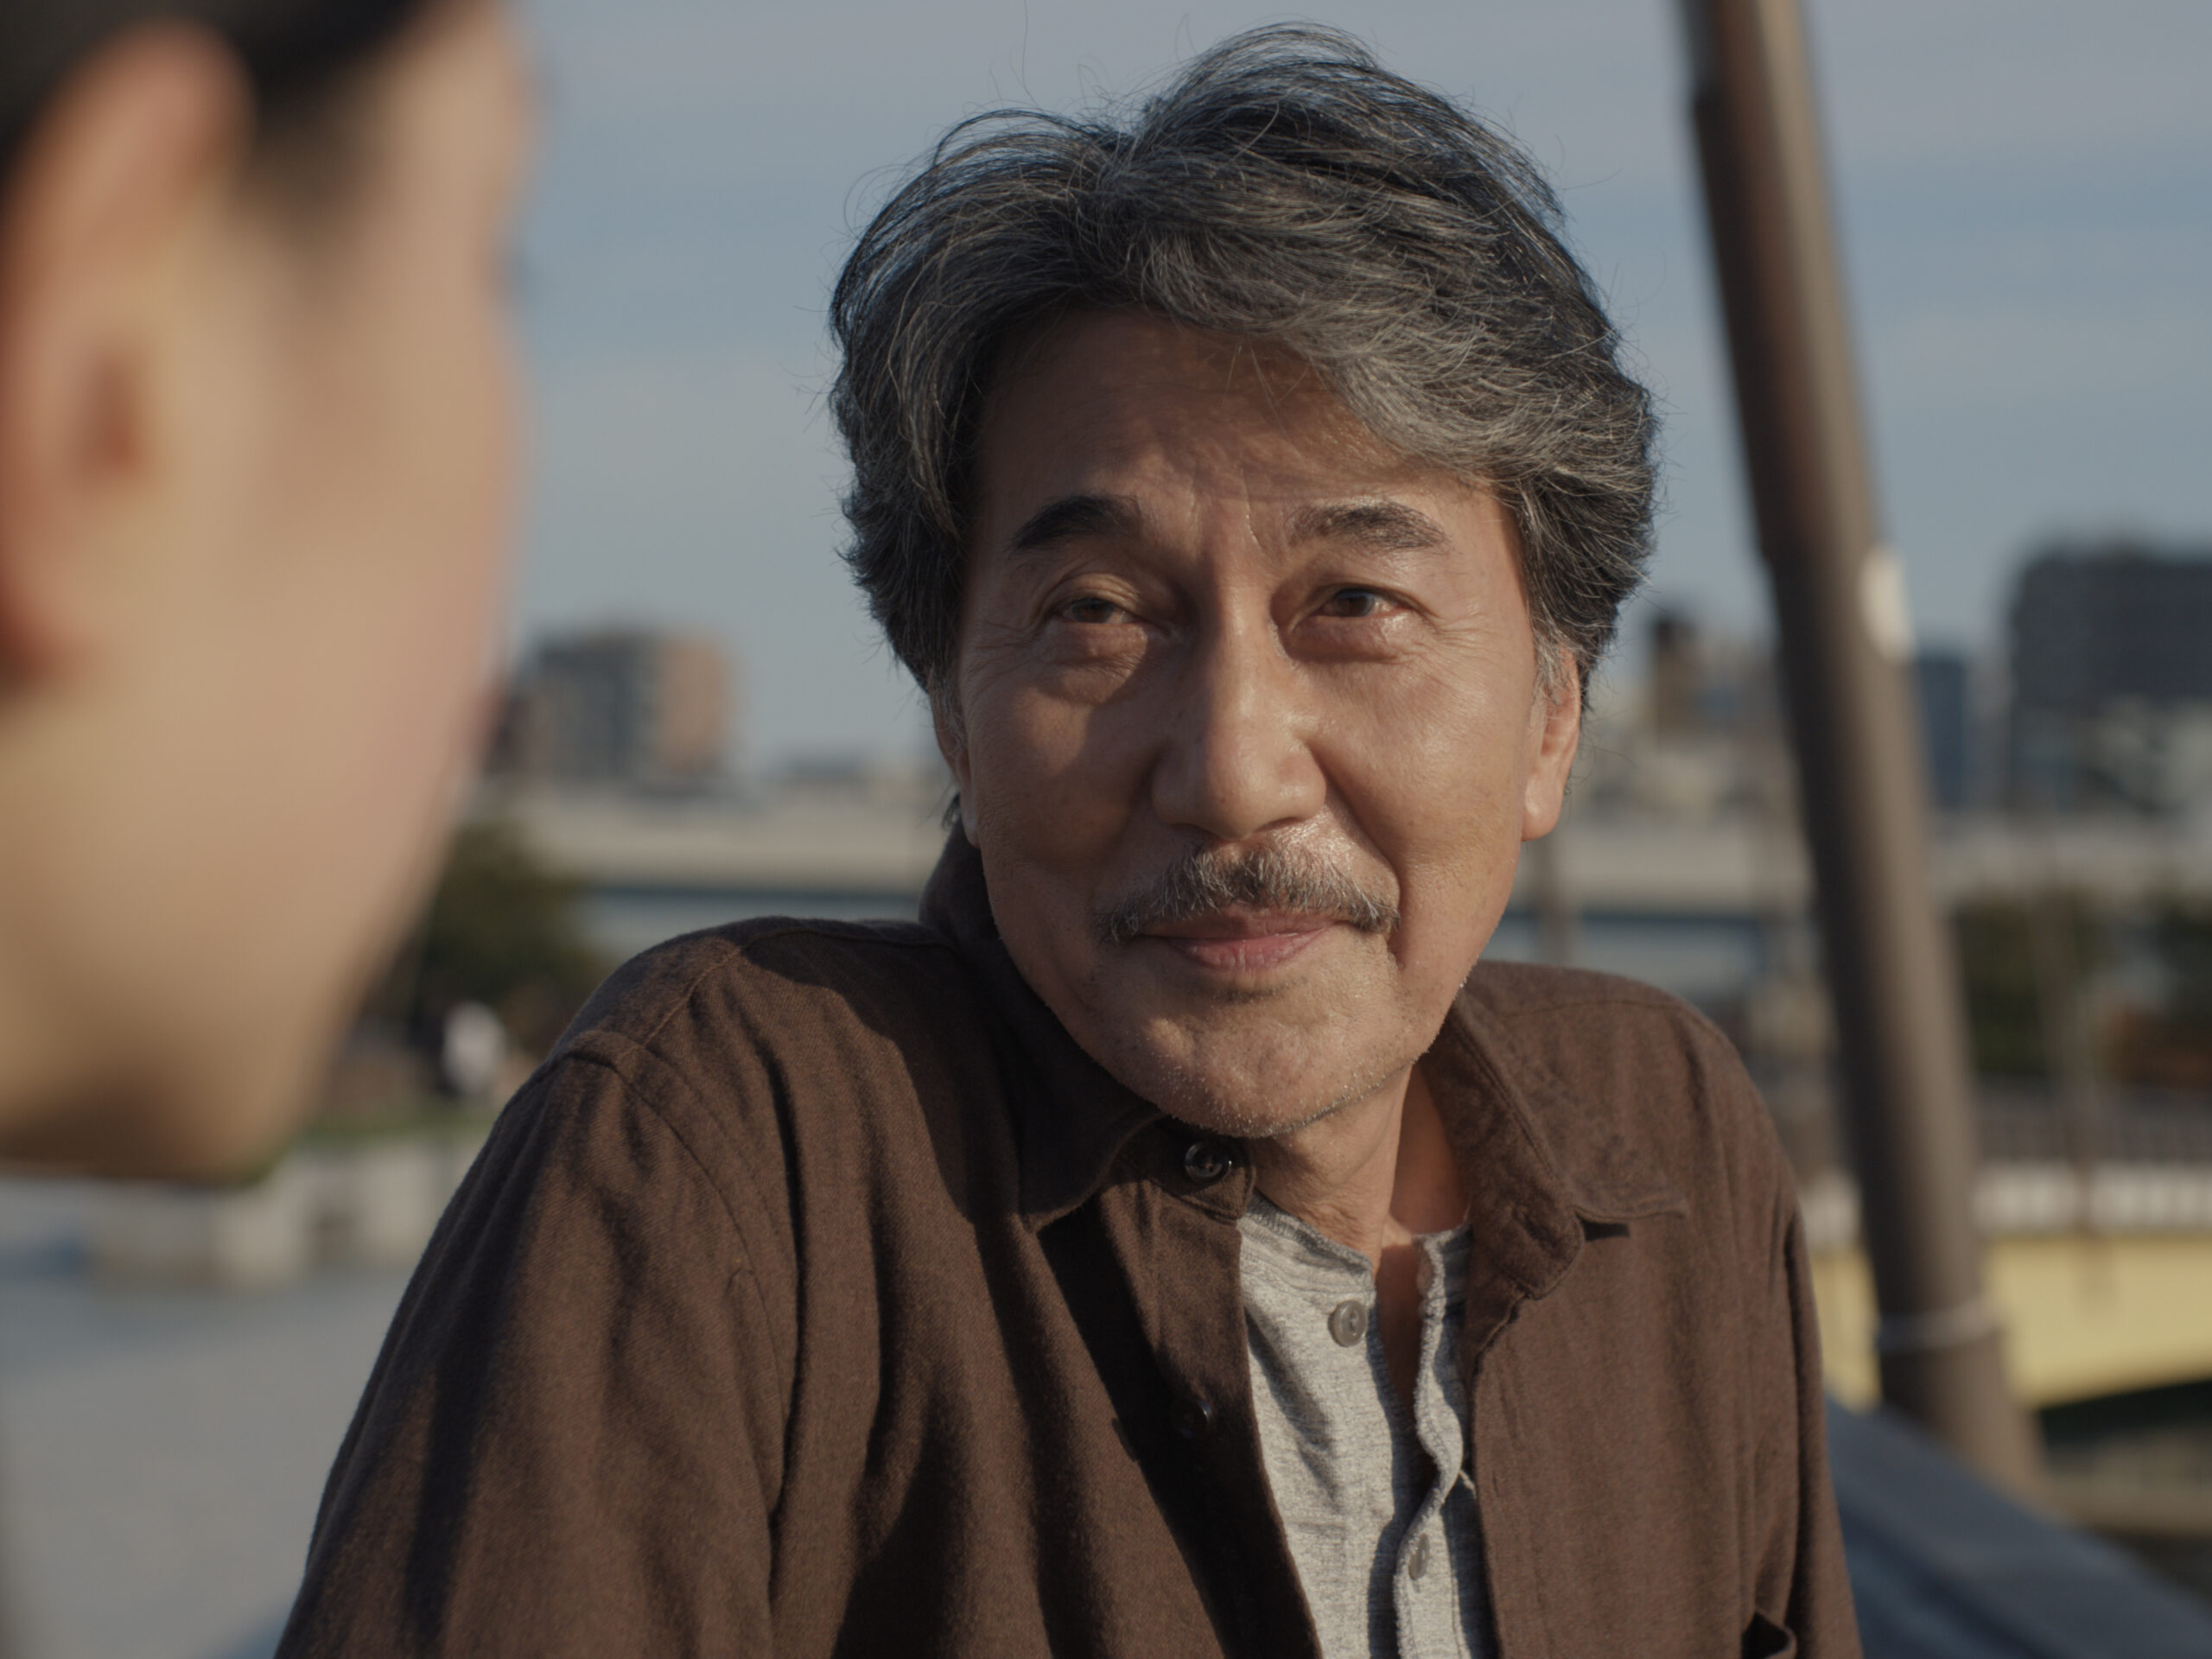 Our hero, Hirayama, played by Koji Yakusho